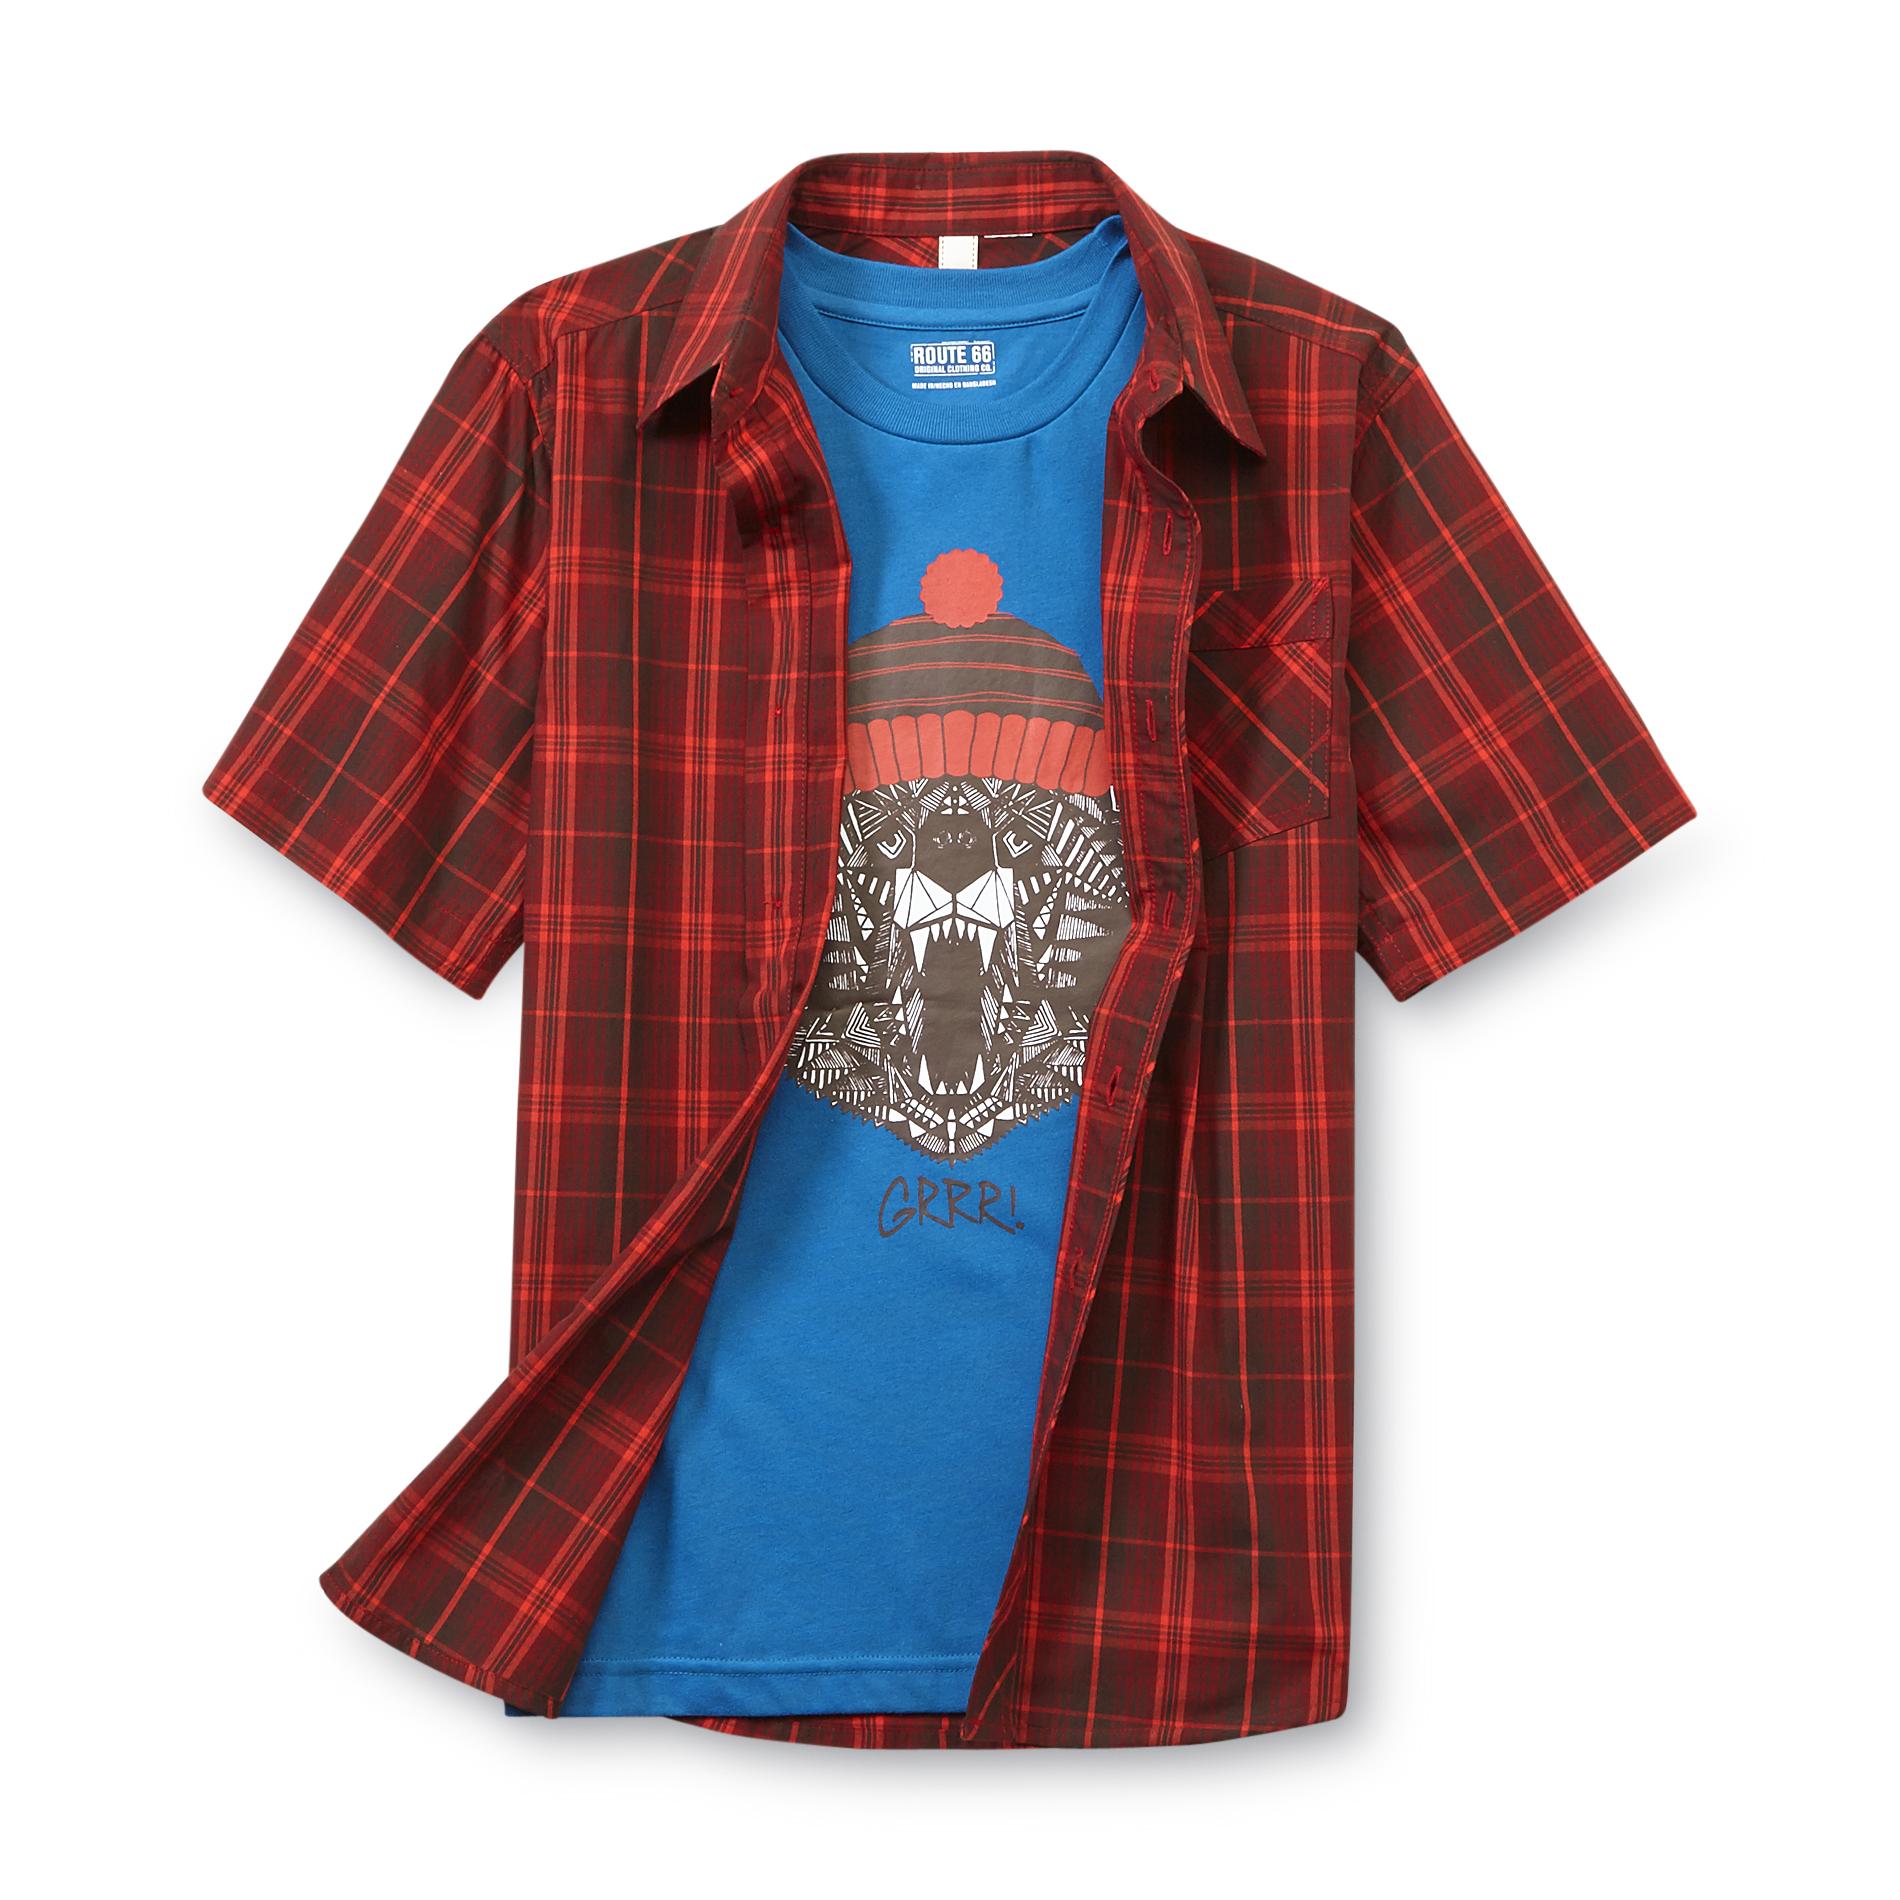 Route 66 Boy's Plaid Shirt & Graphic T-Shirt - Bear